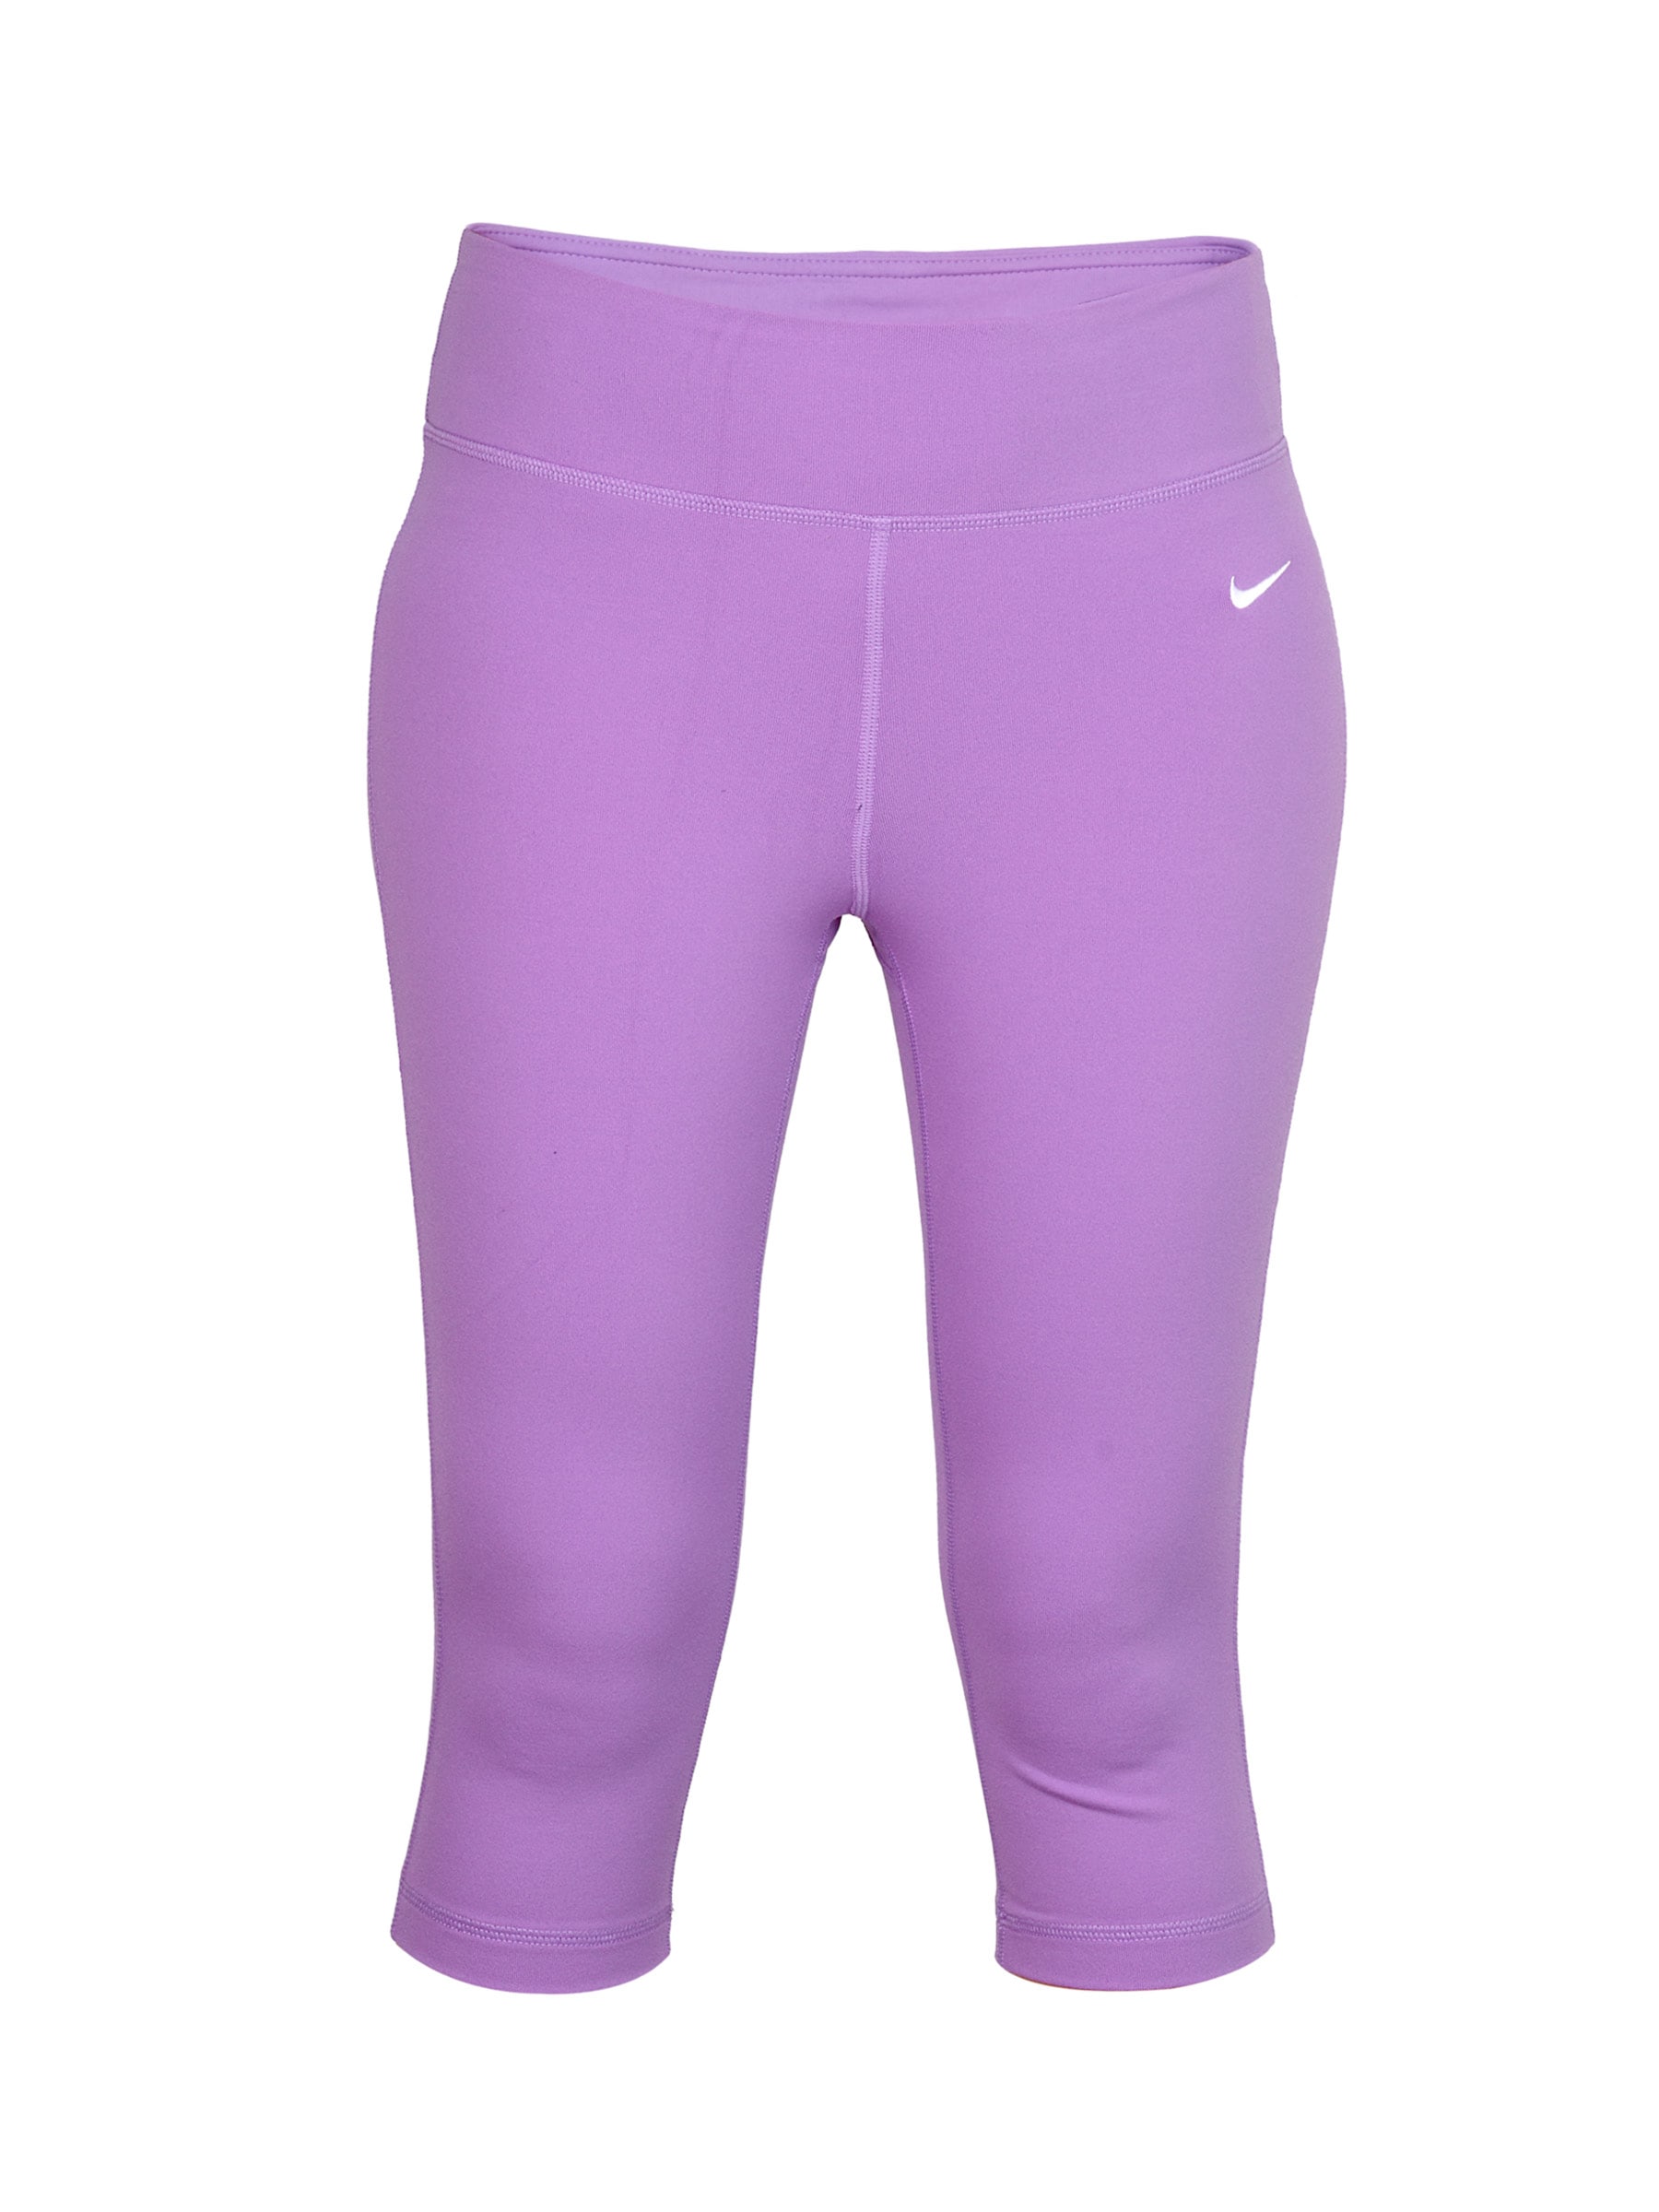 Nike Women Be Fast Purple Capri